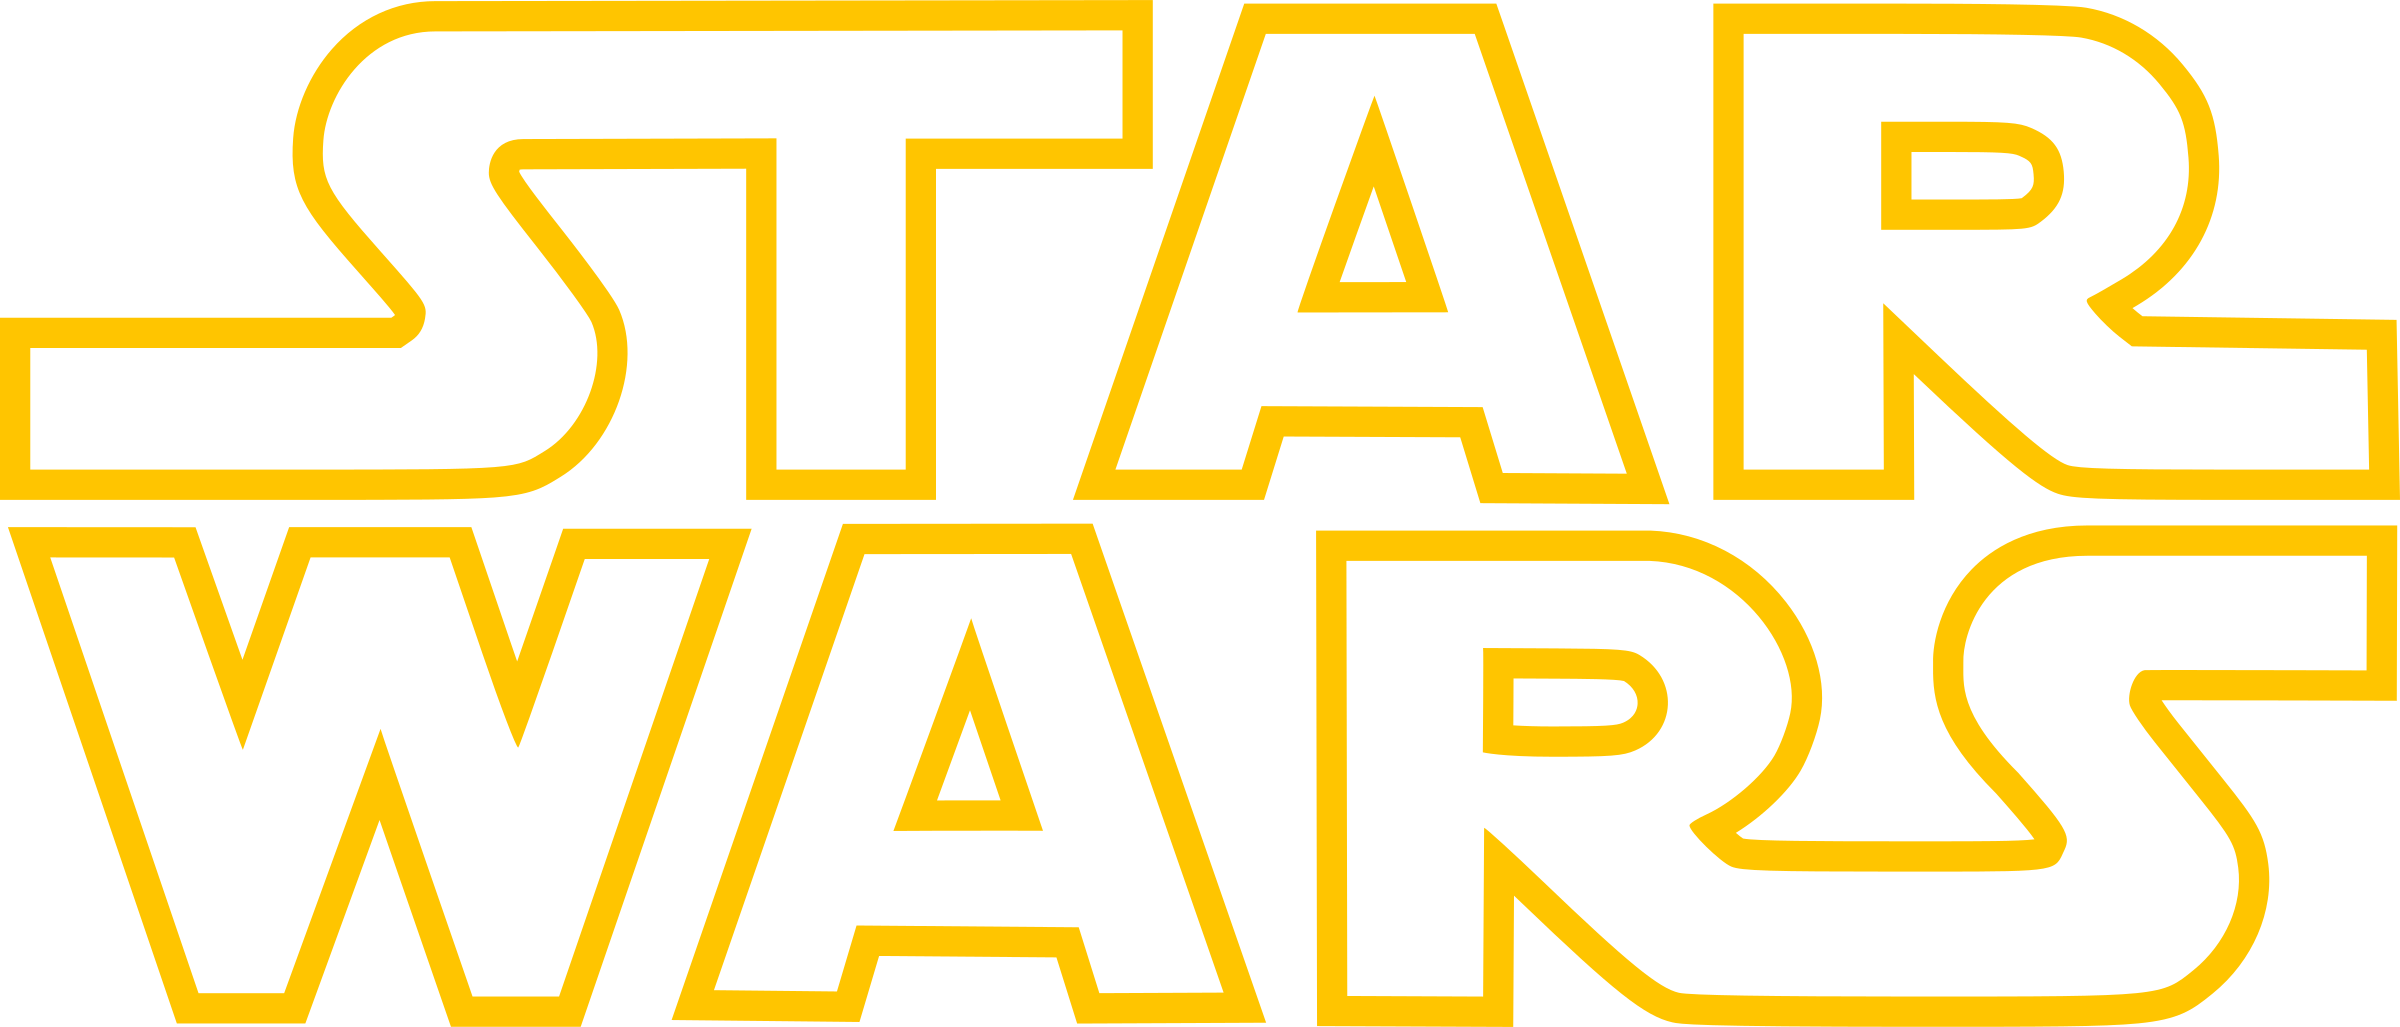 Star Wars Logo PNG صورة عالية الجودة